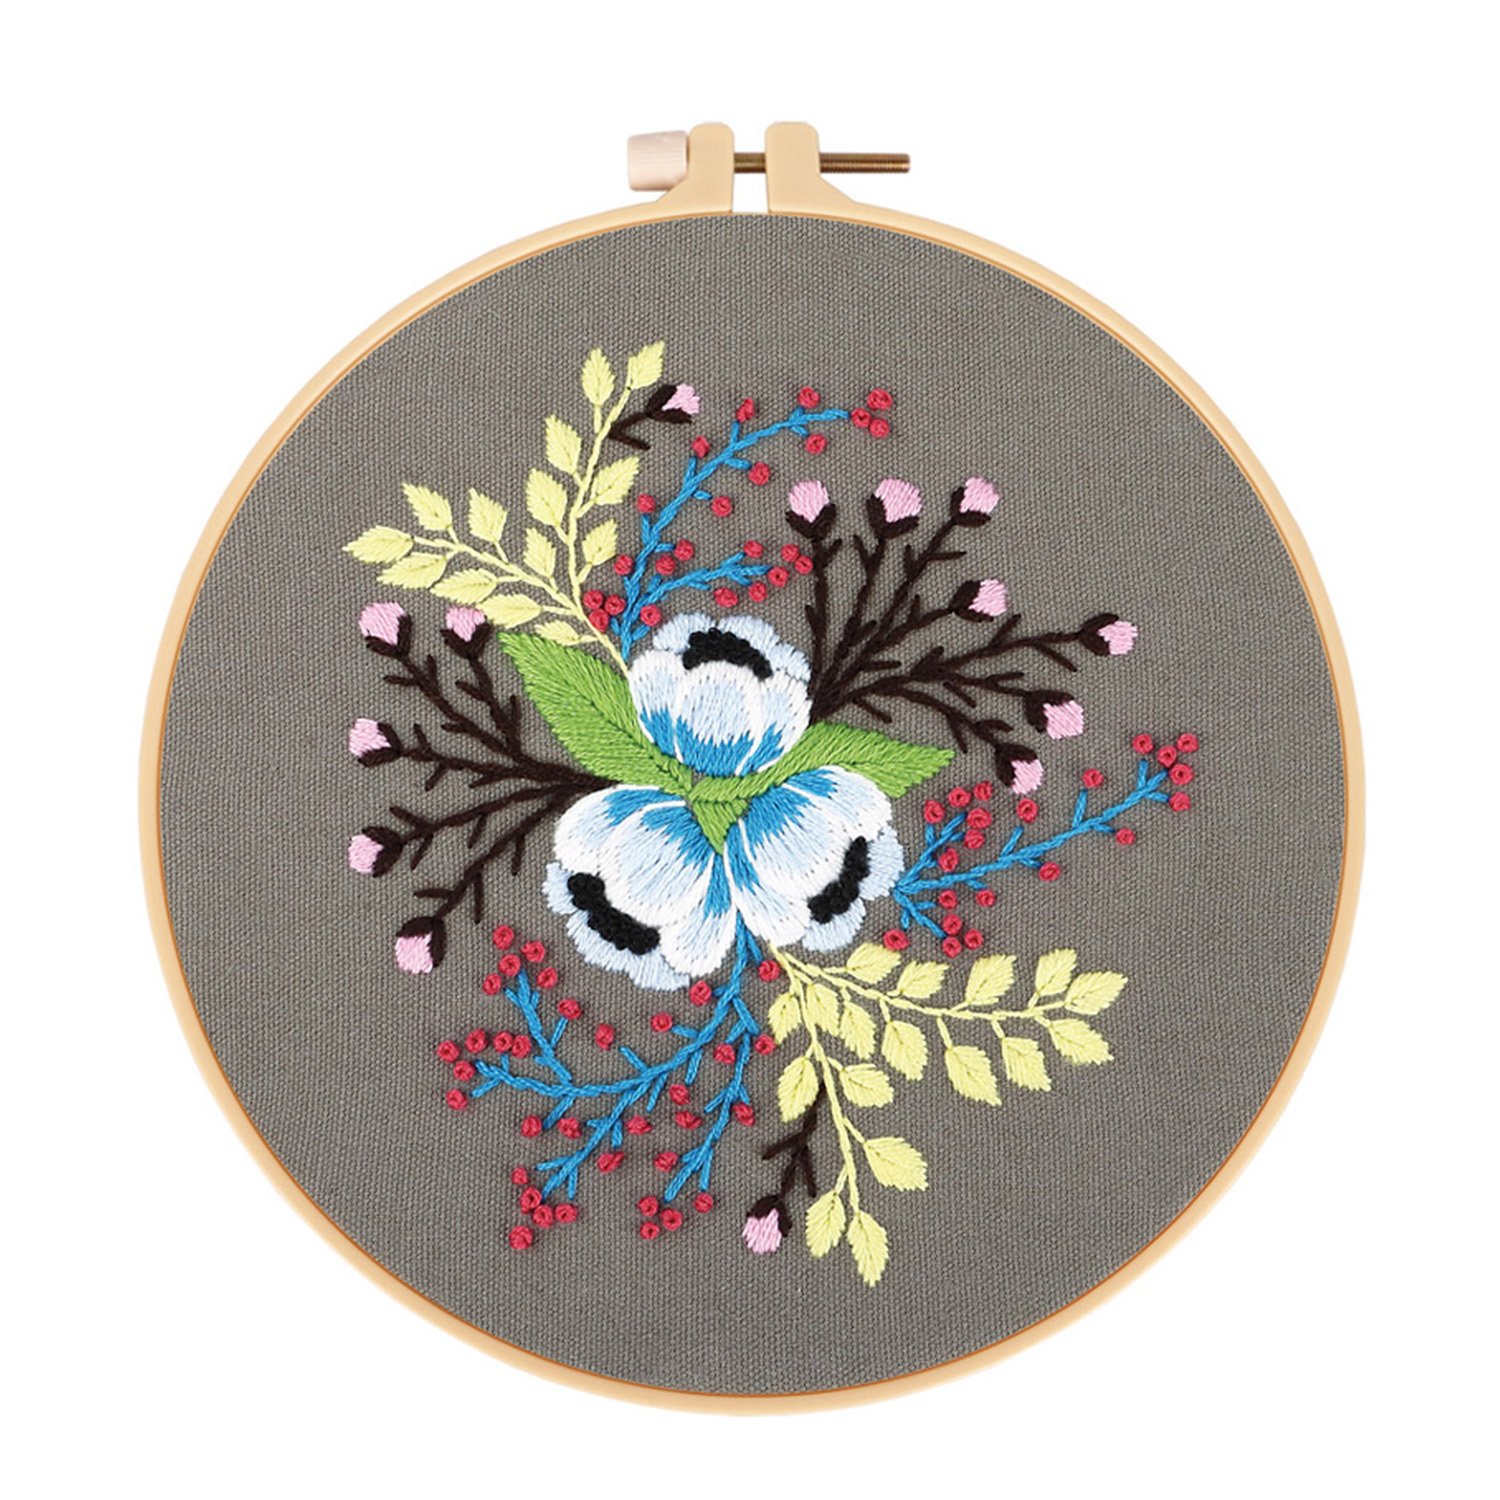 DIY Handmade Embroidery Cross stitch kit - Retro Exquisite Bouquet Pattern